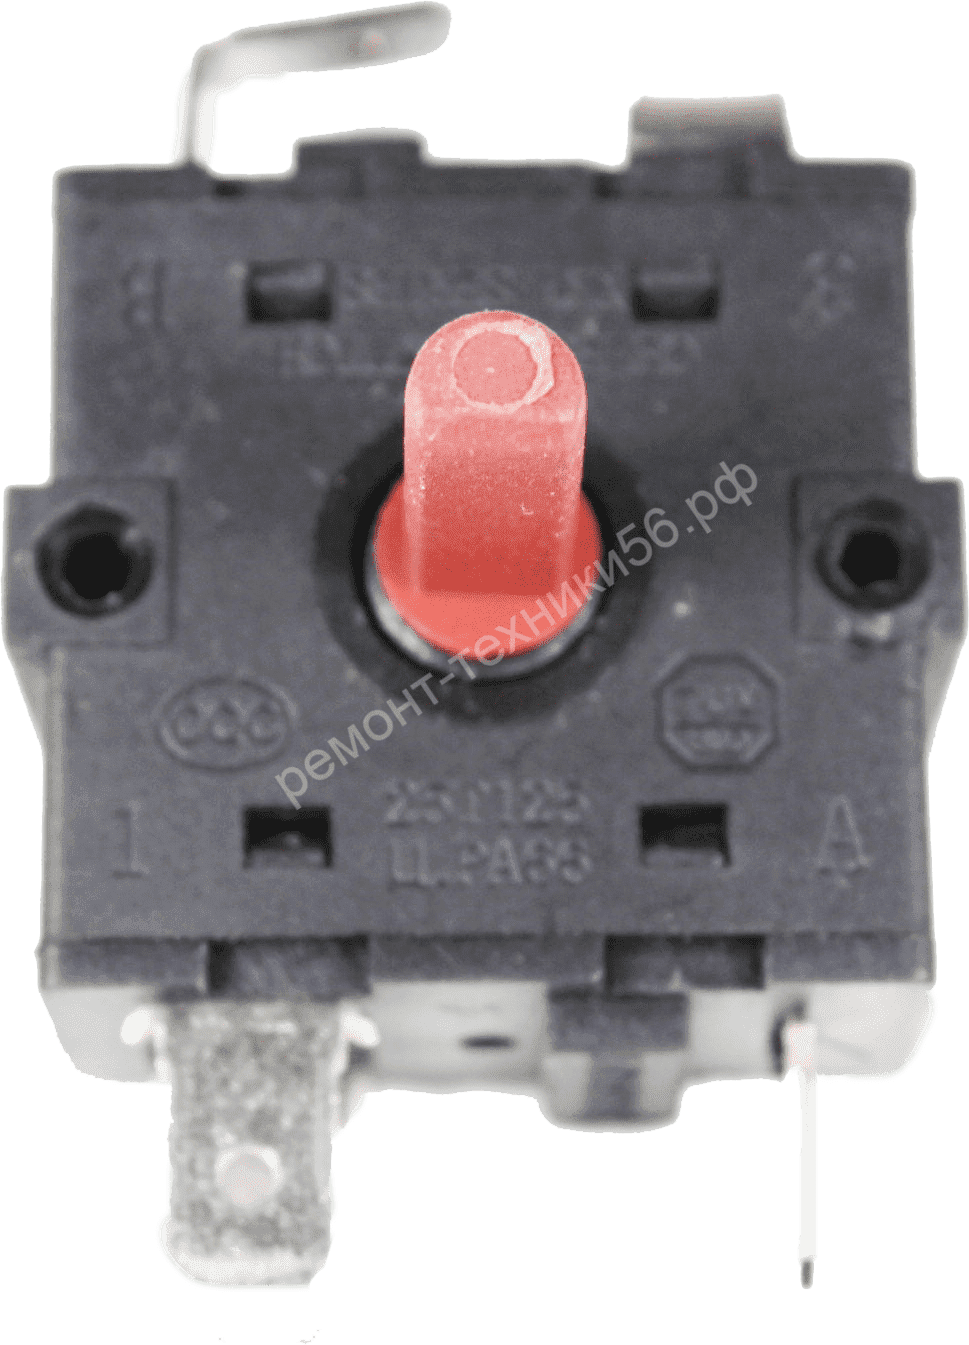 Переключатель Rotary Switch XK1-233,2-1 AC ELECTRIC ACE-HD2 приобрести в Рокоста фото3